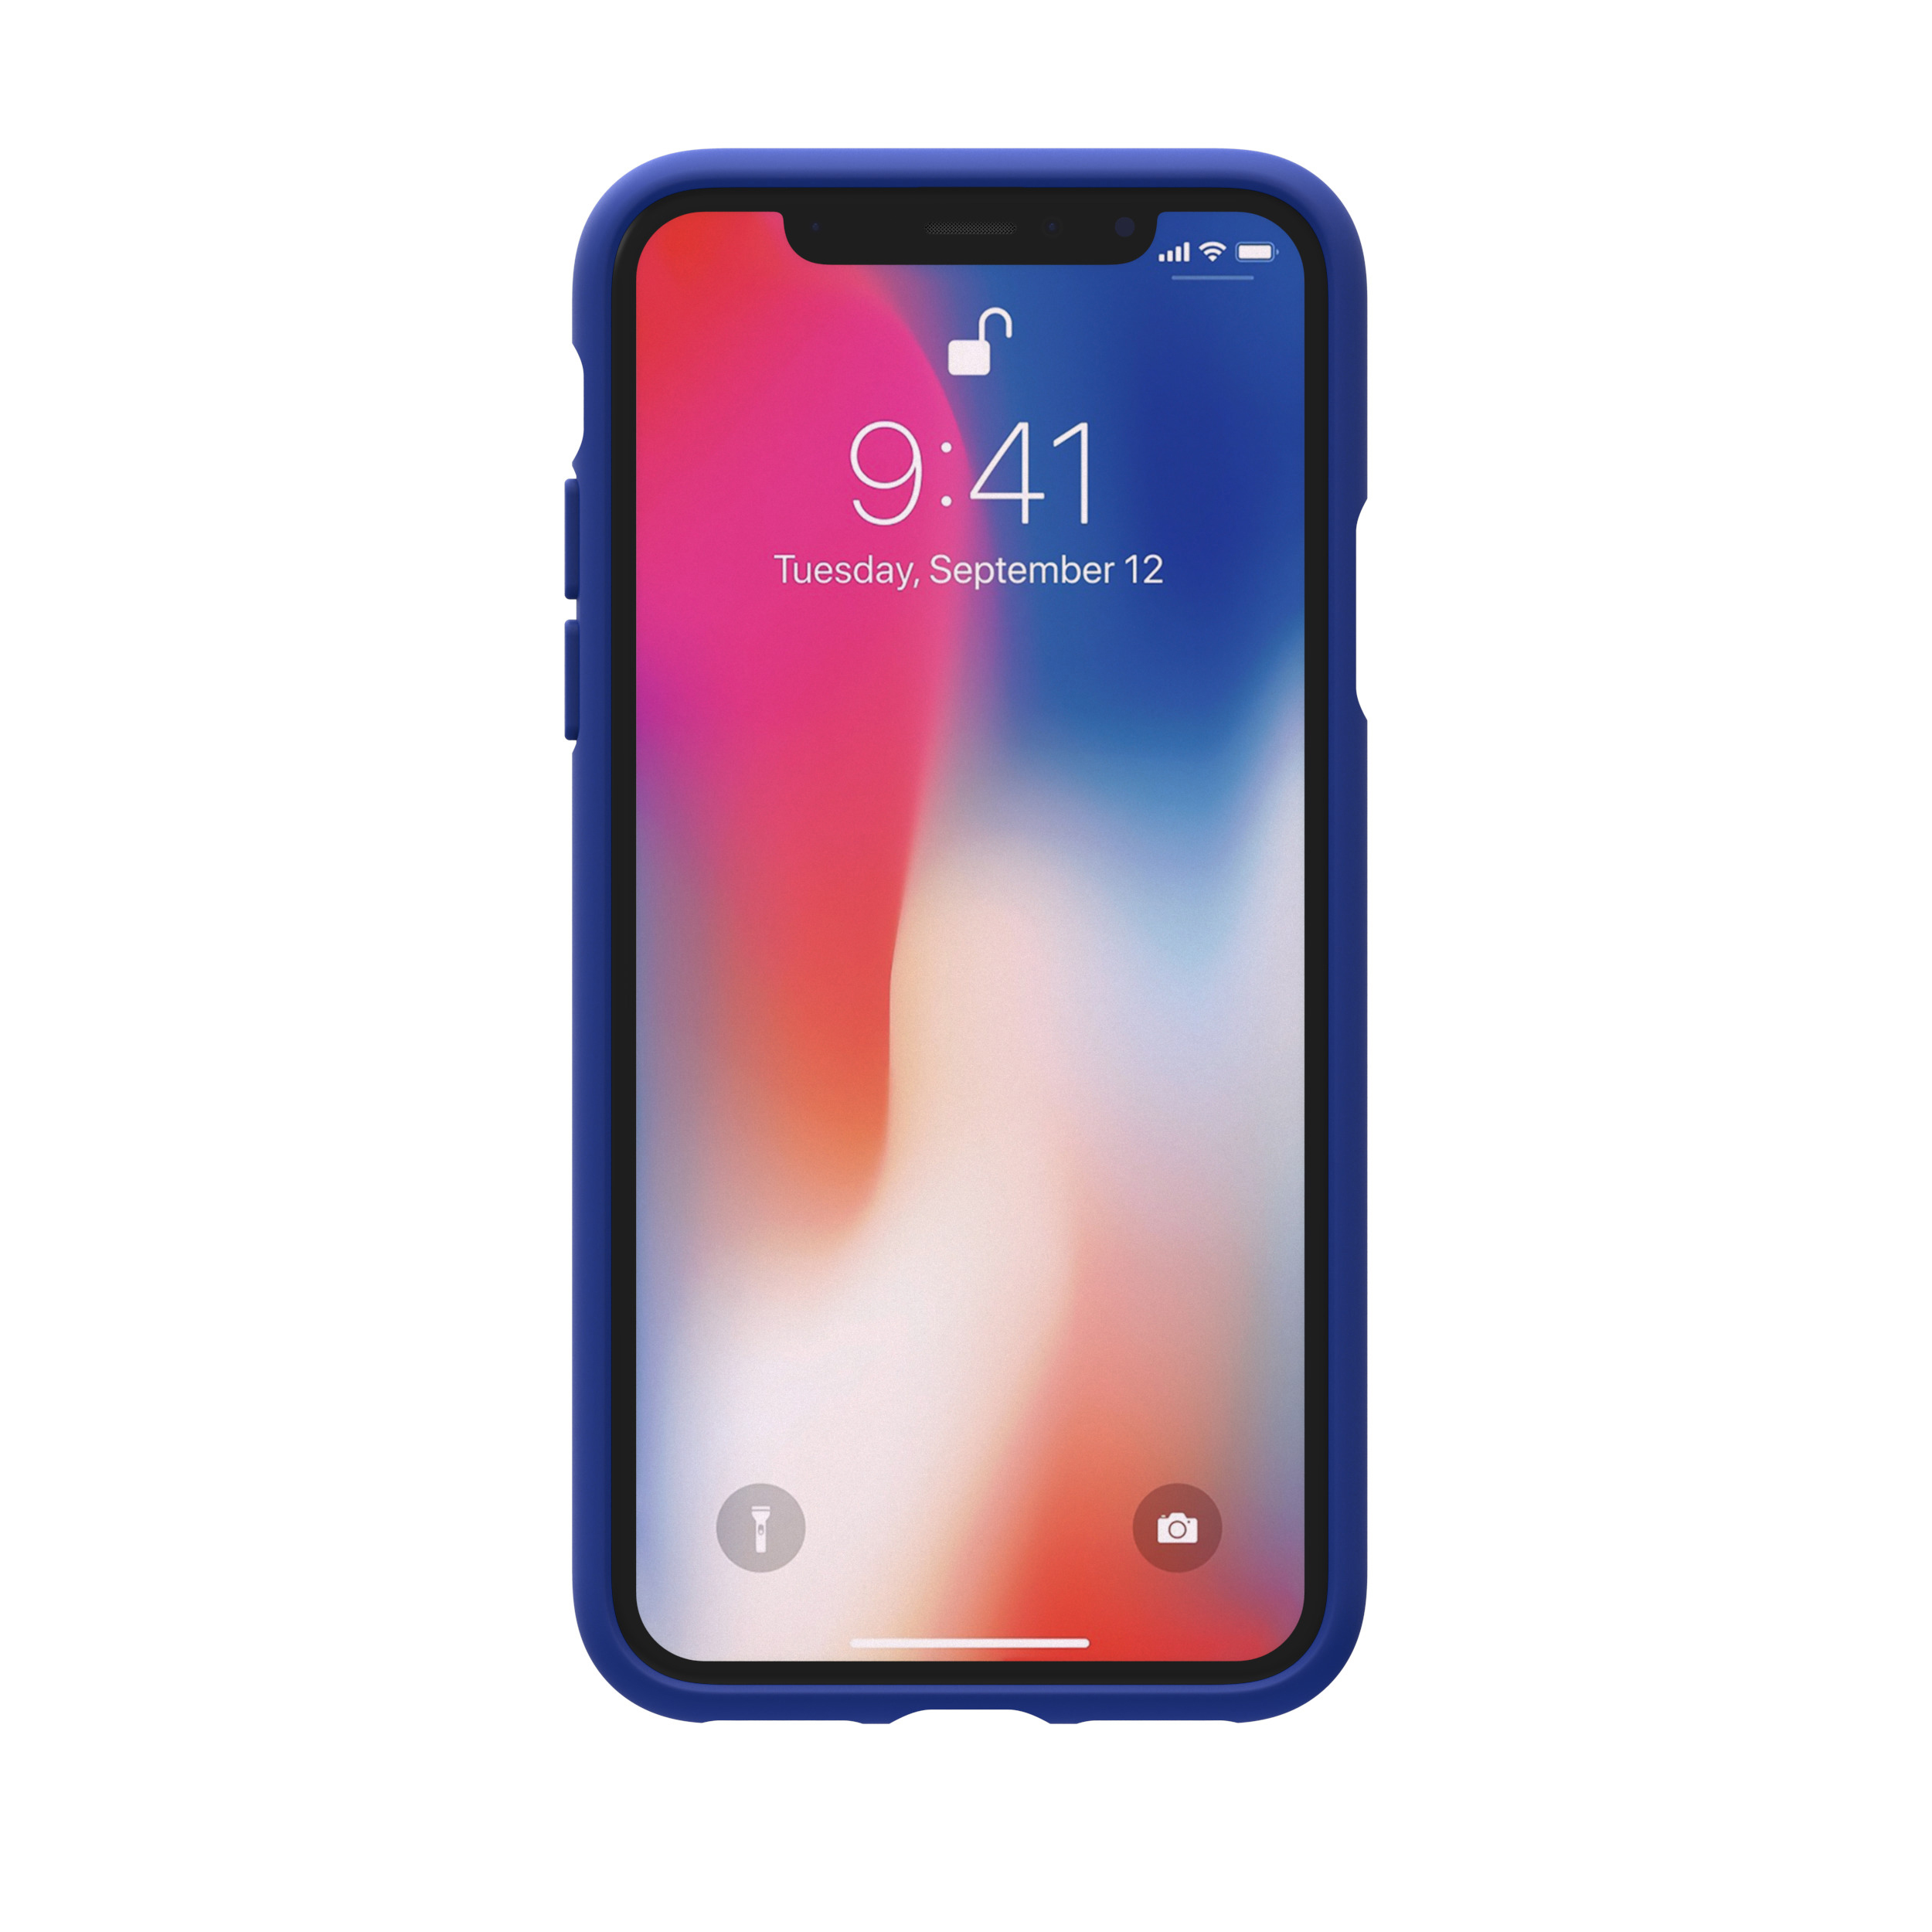 Case, Apple, ADIDAS X, ORIGINALS Backcover, iPhone Moulded Blau